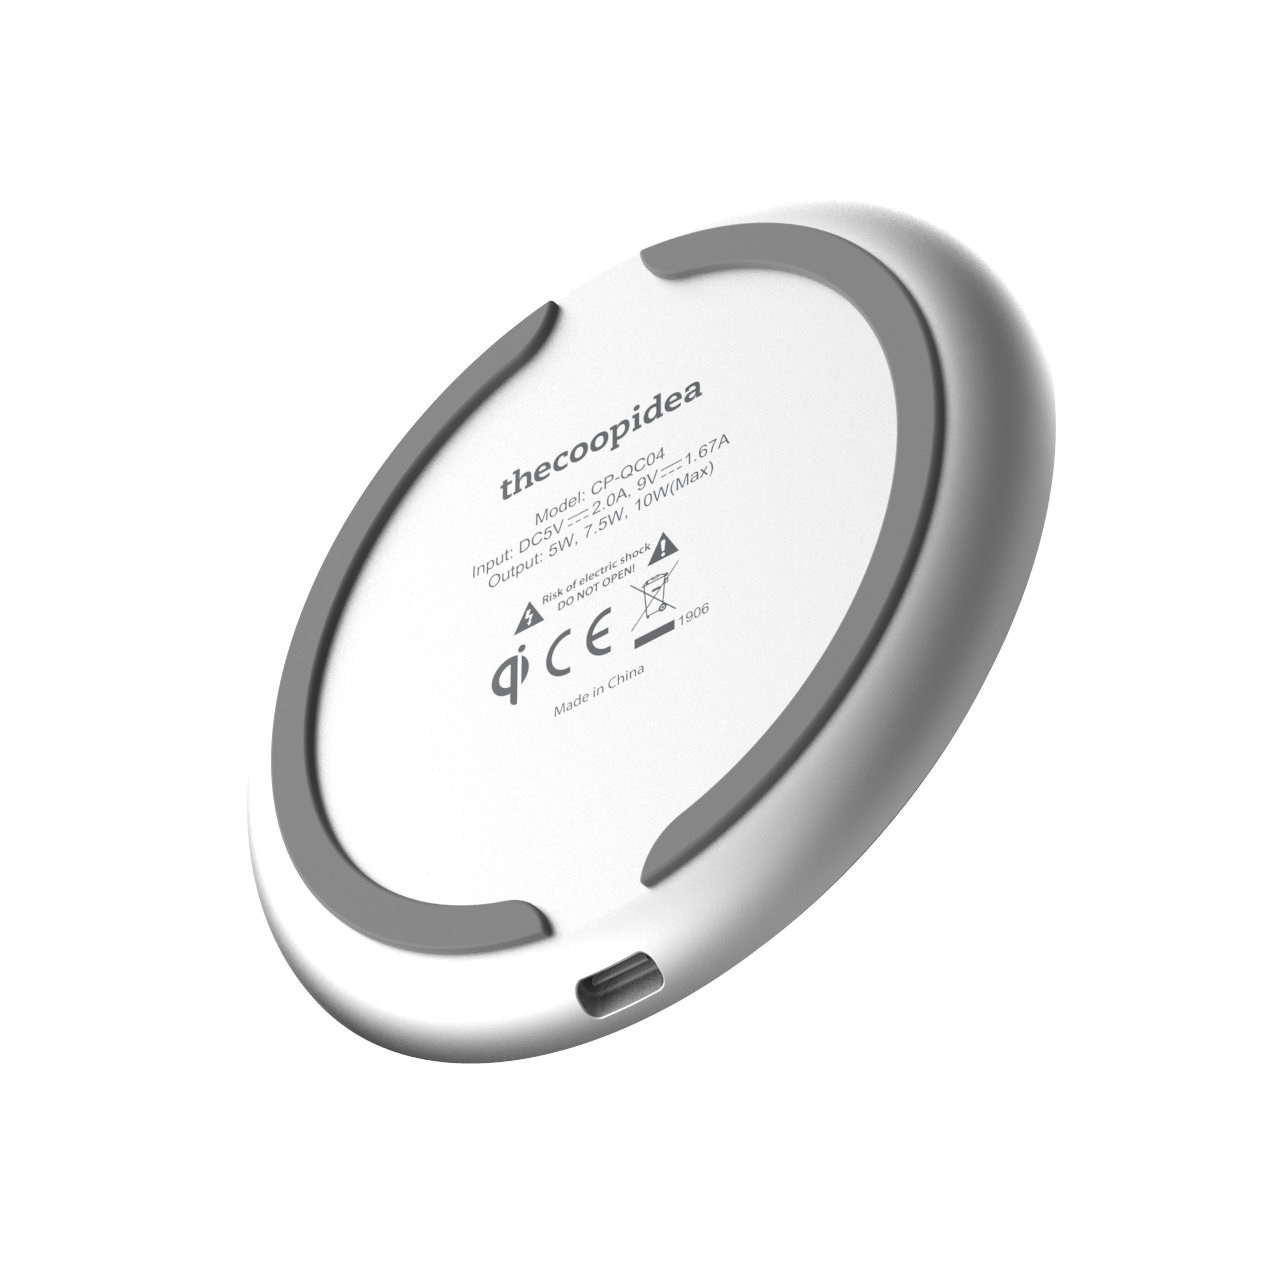 thecoopidea - MOON - Terrazzo Navy Wireless Charging Pad